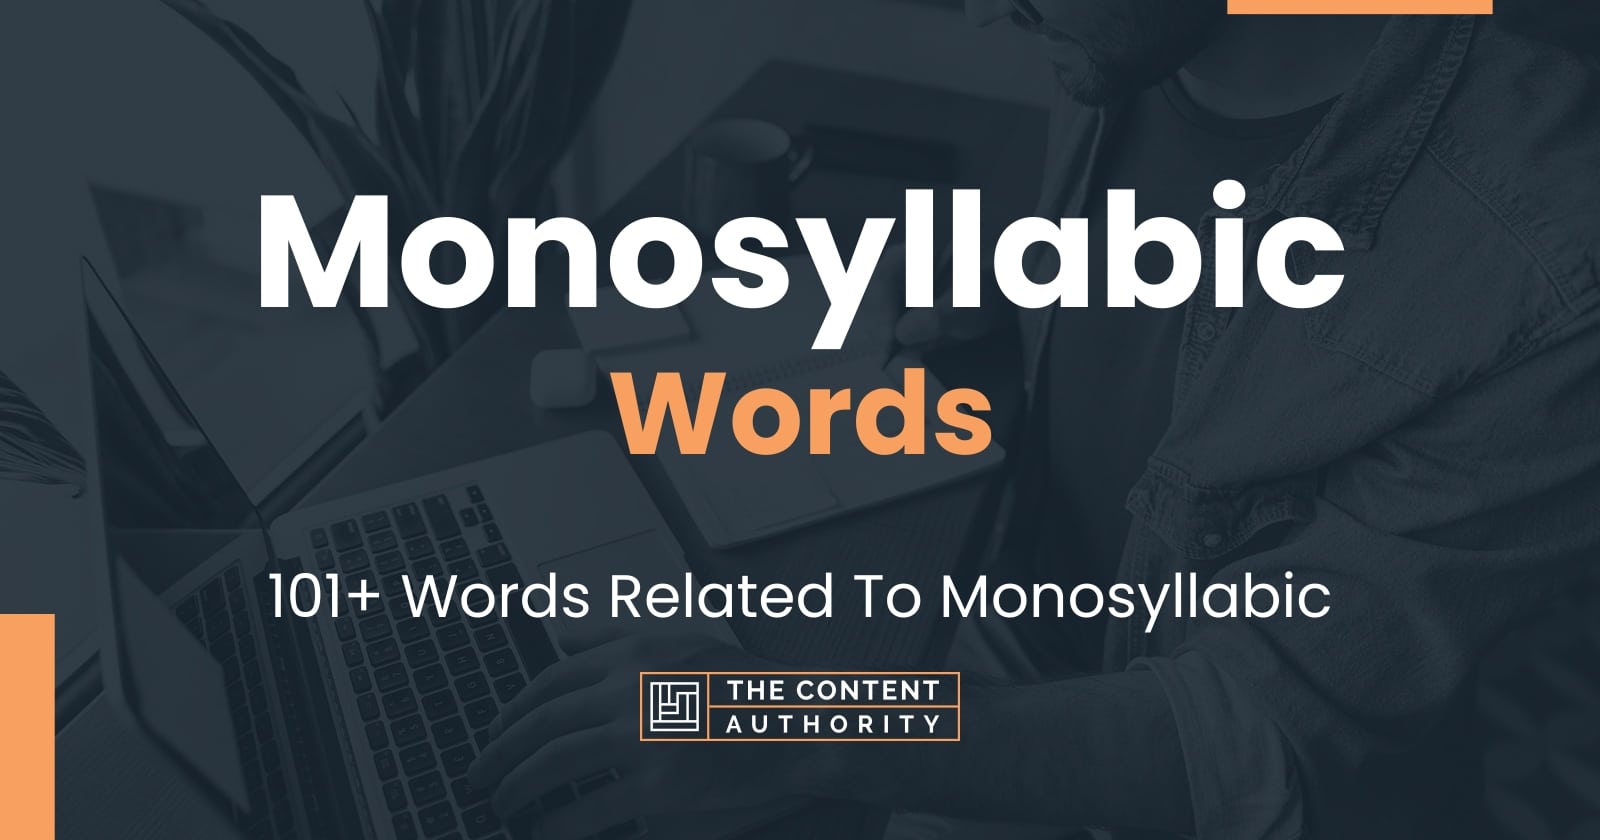 Monosyllabic Words - 101+ Words Related To Monosyllabic